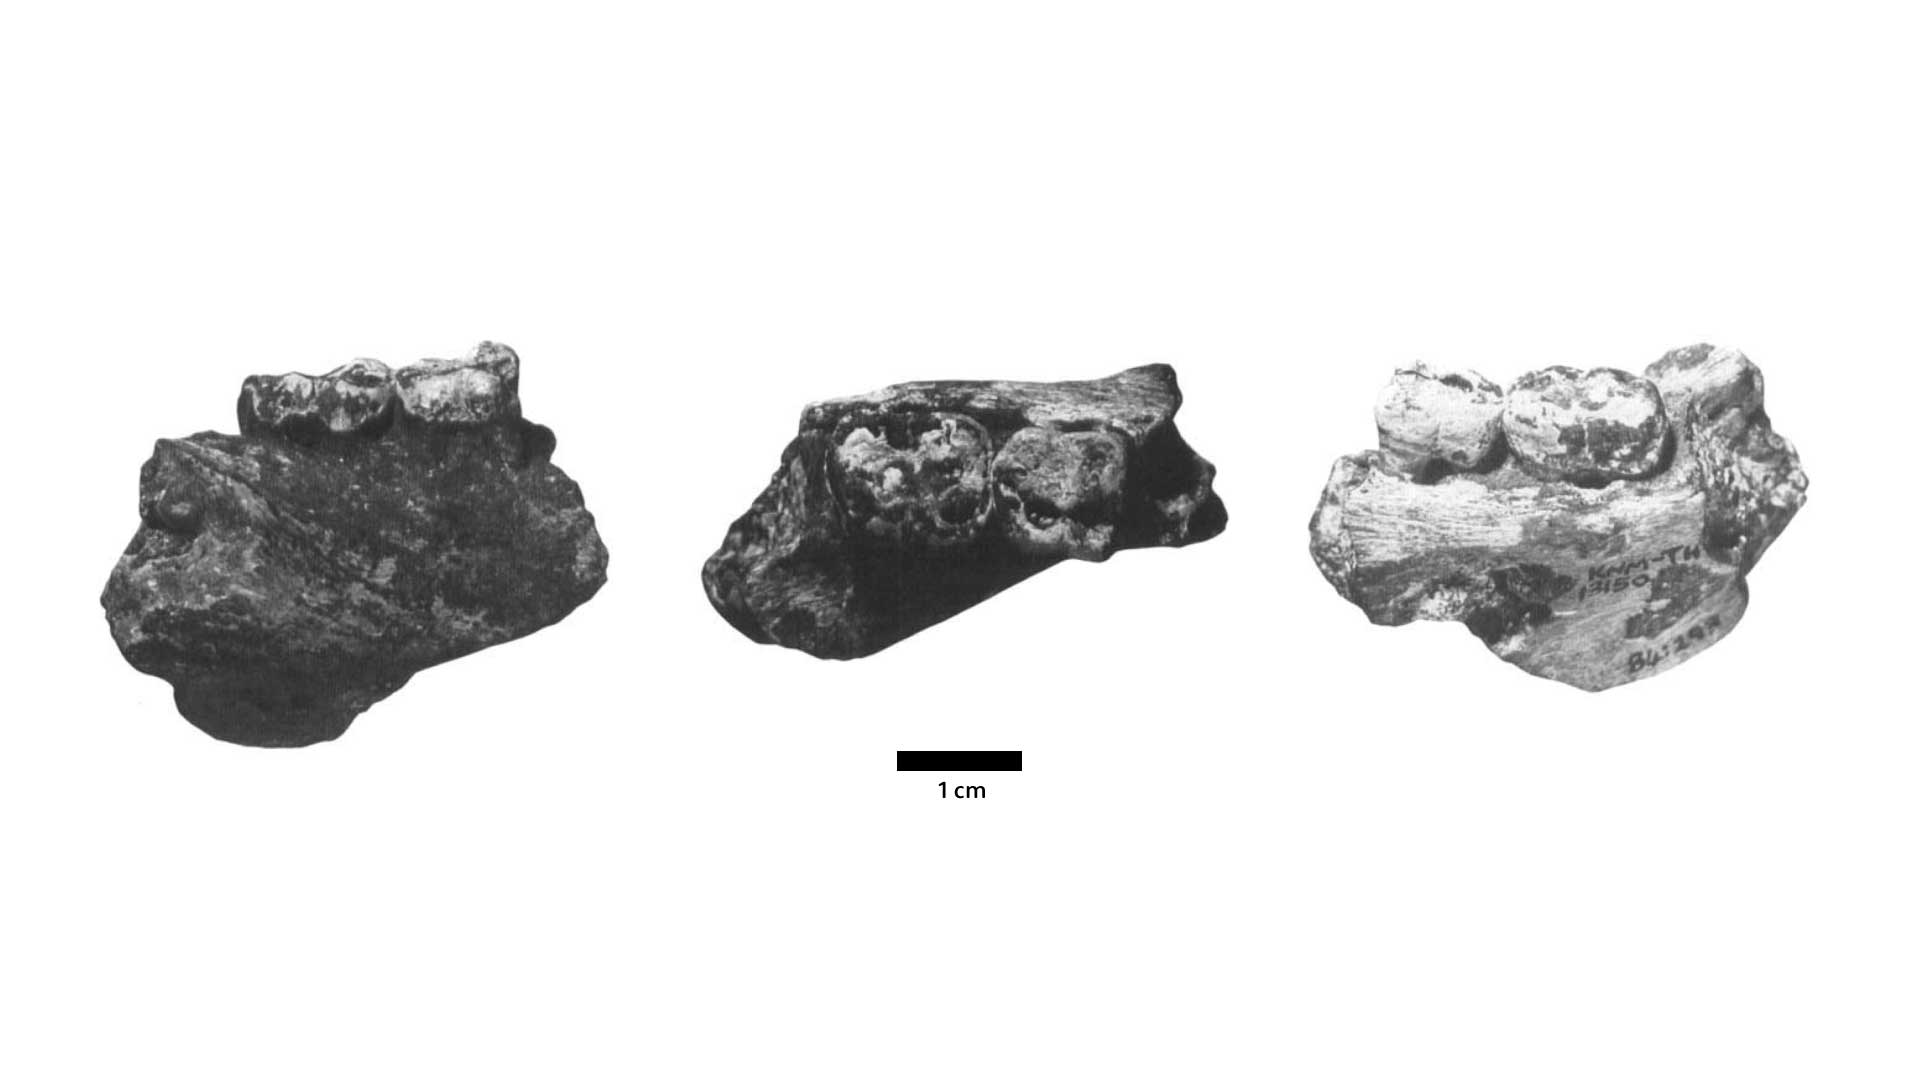 Mandibular fragment with M1 and M2 in three views